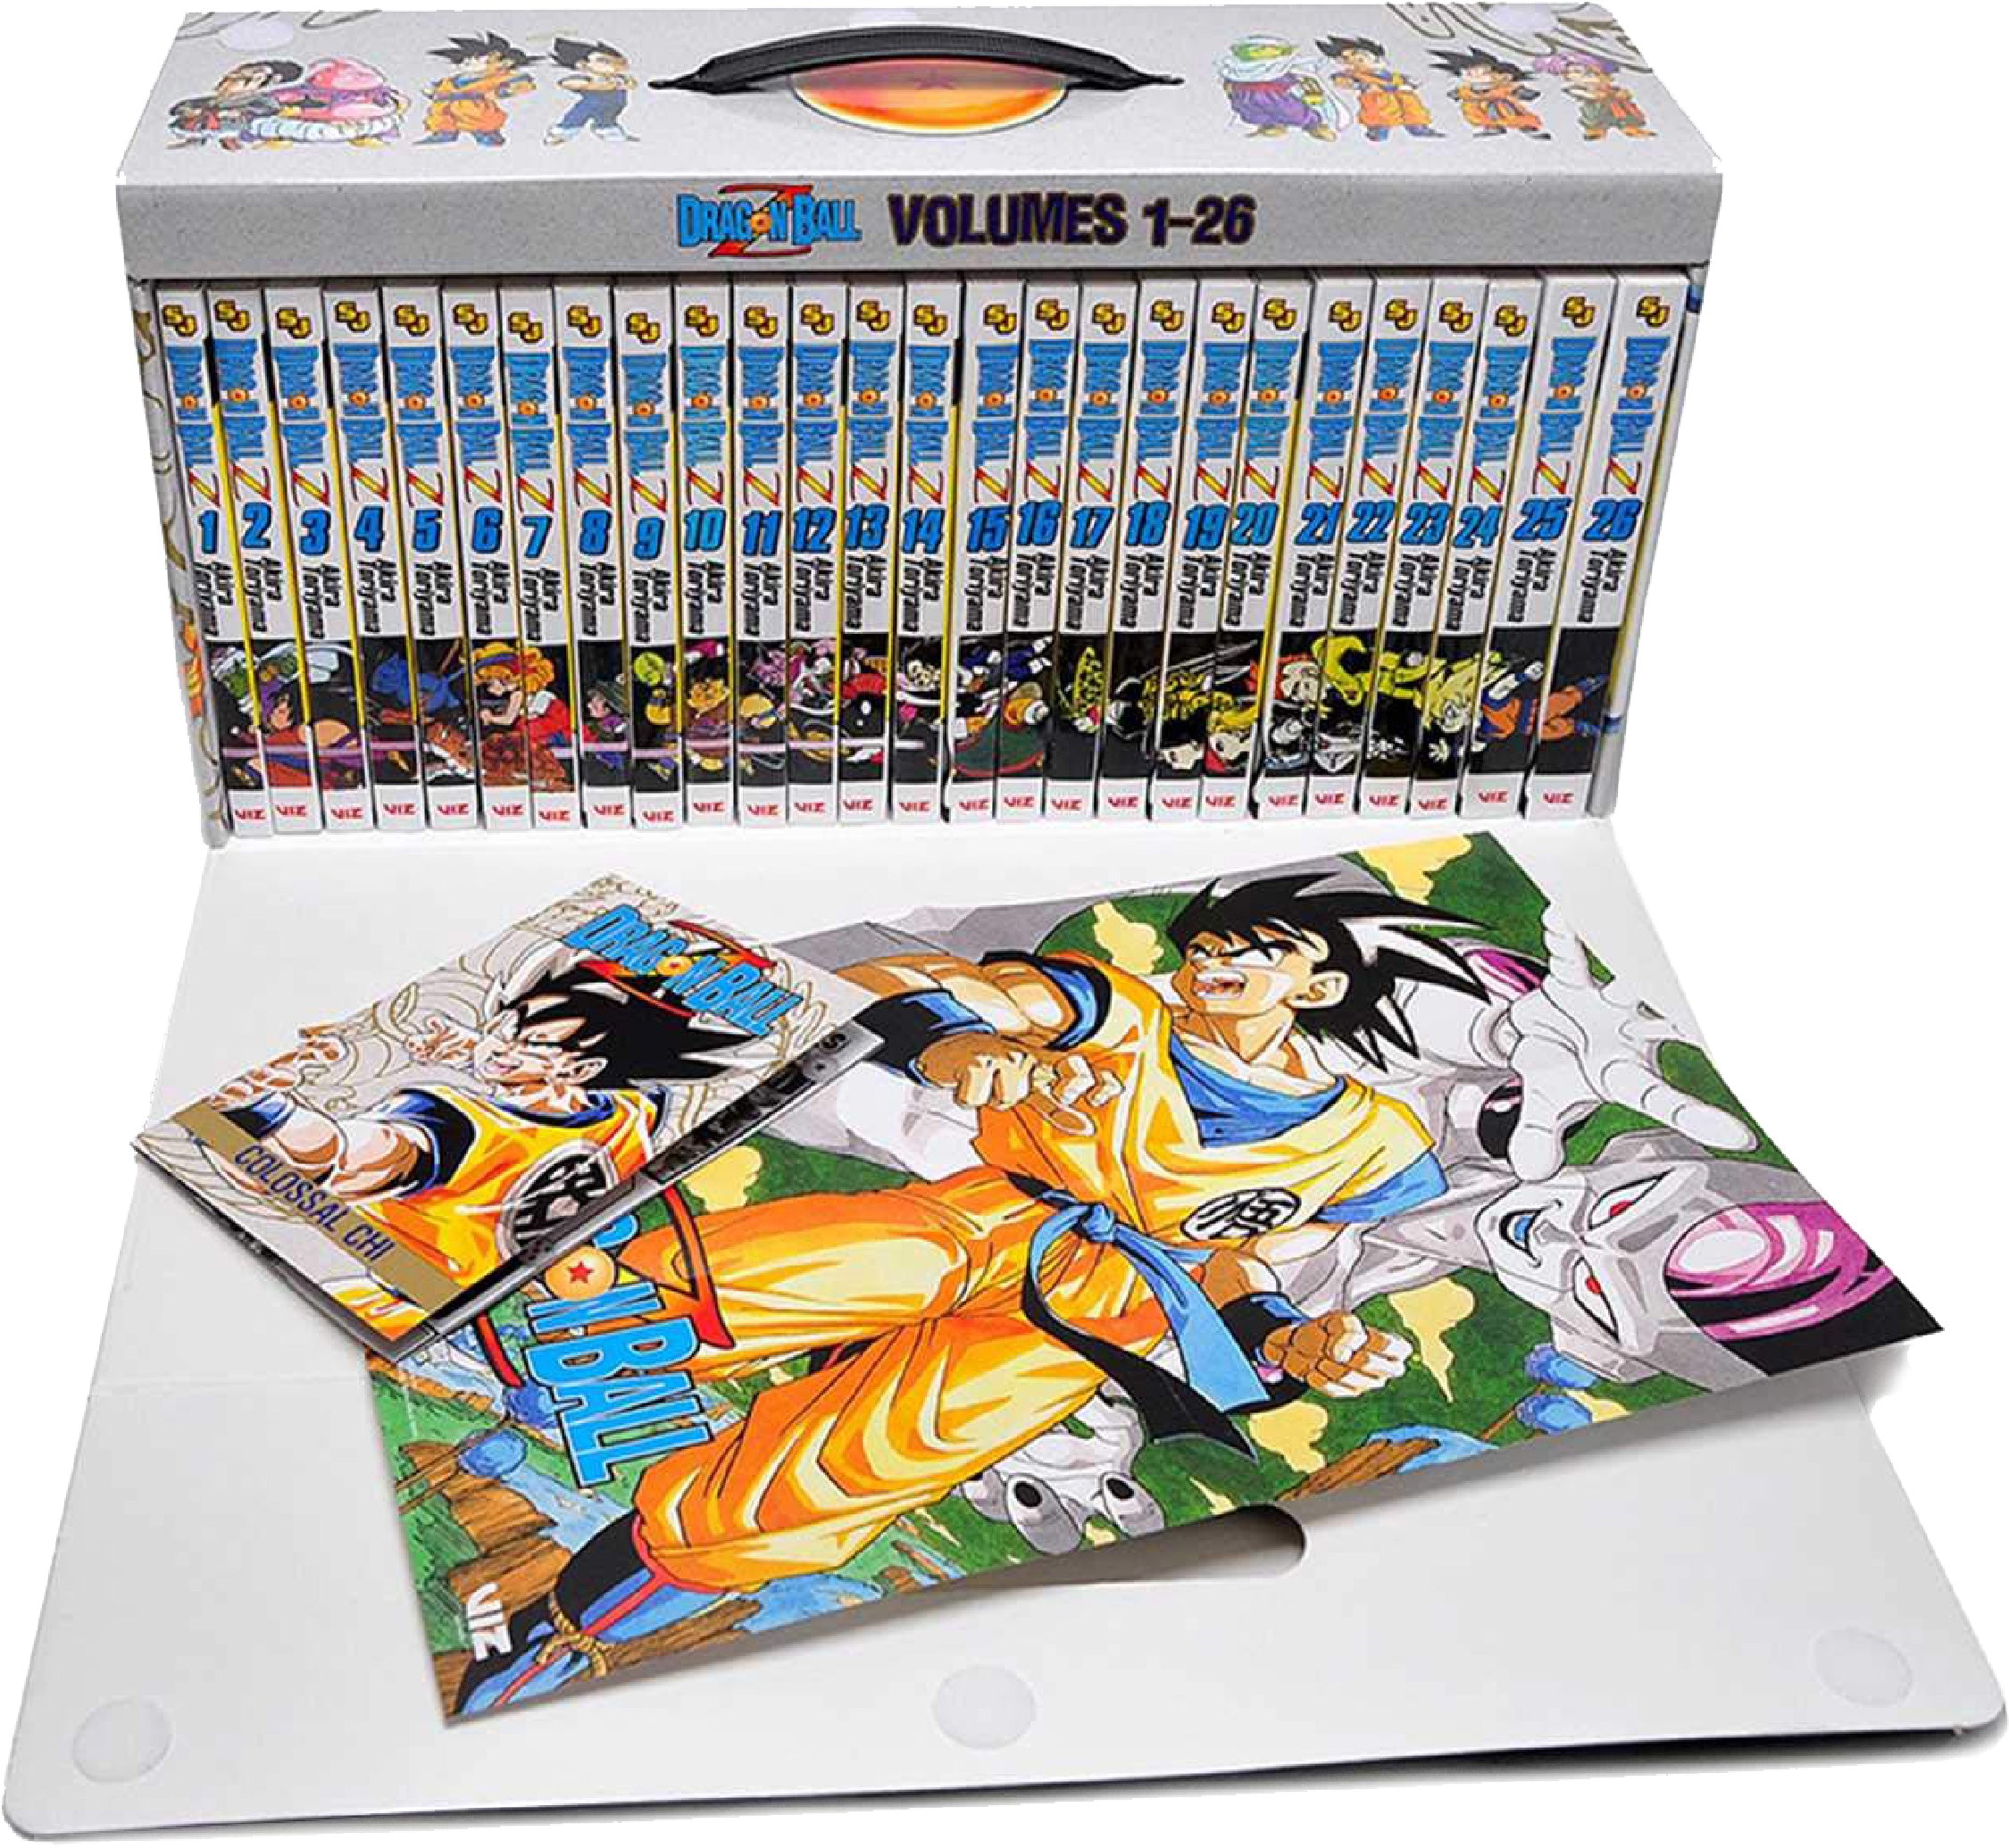 Dragon Ball Z Complete Box Set Vols. 1-26 with Premium